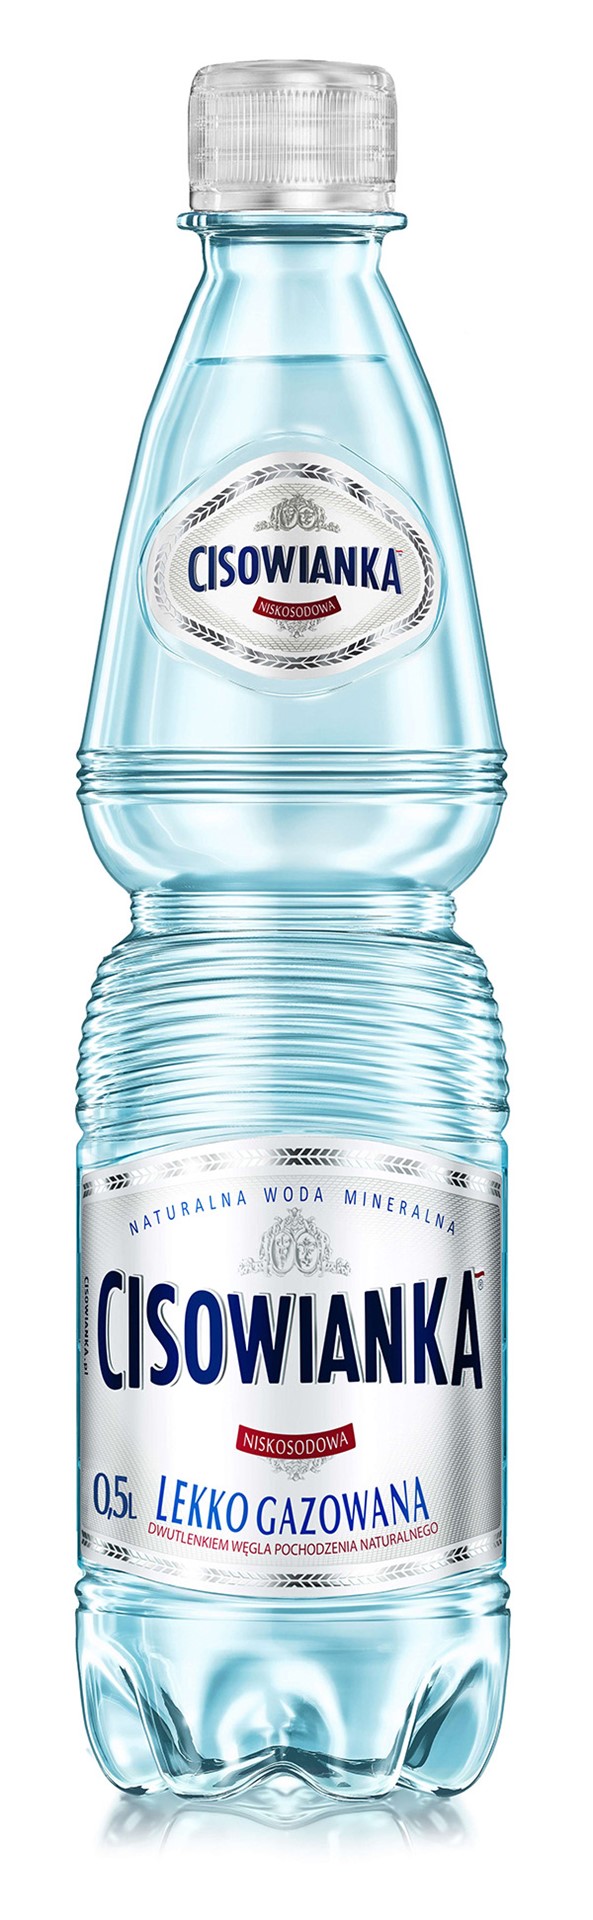 Woda mineralna Cisowianka lekko gazowana 0,5 l PET